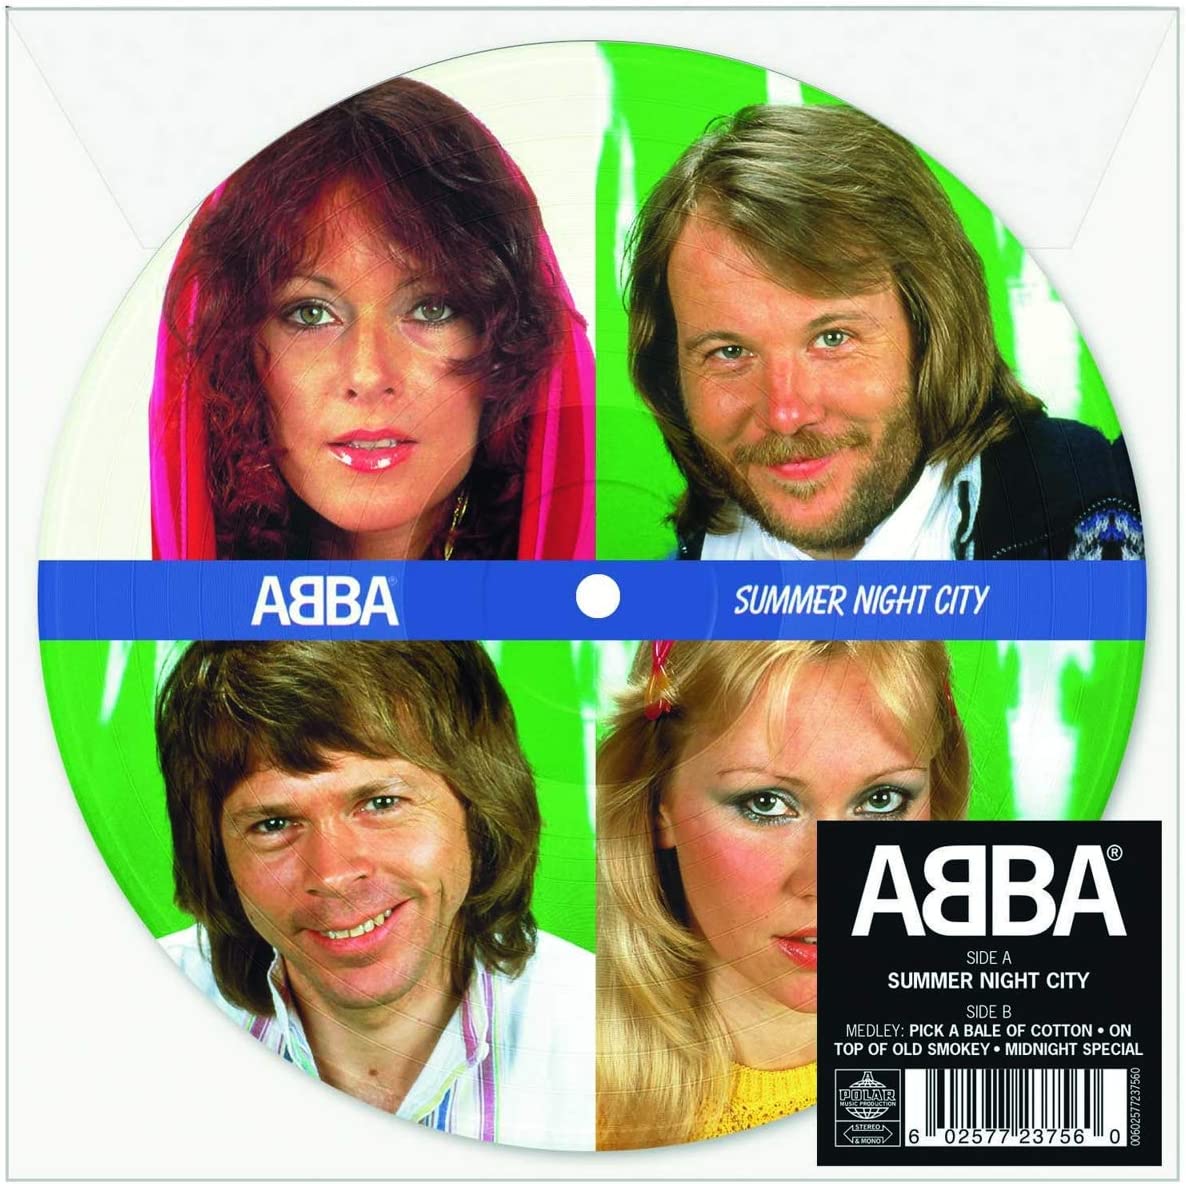 ABBA - Summer Night City (7'' Picture Single)(45 RPM)